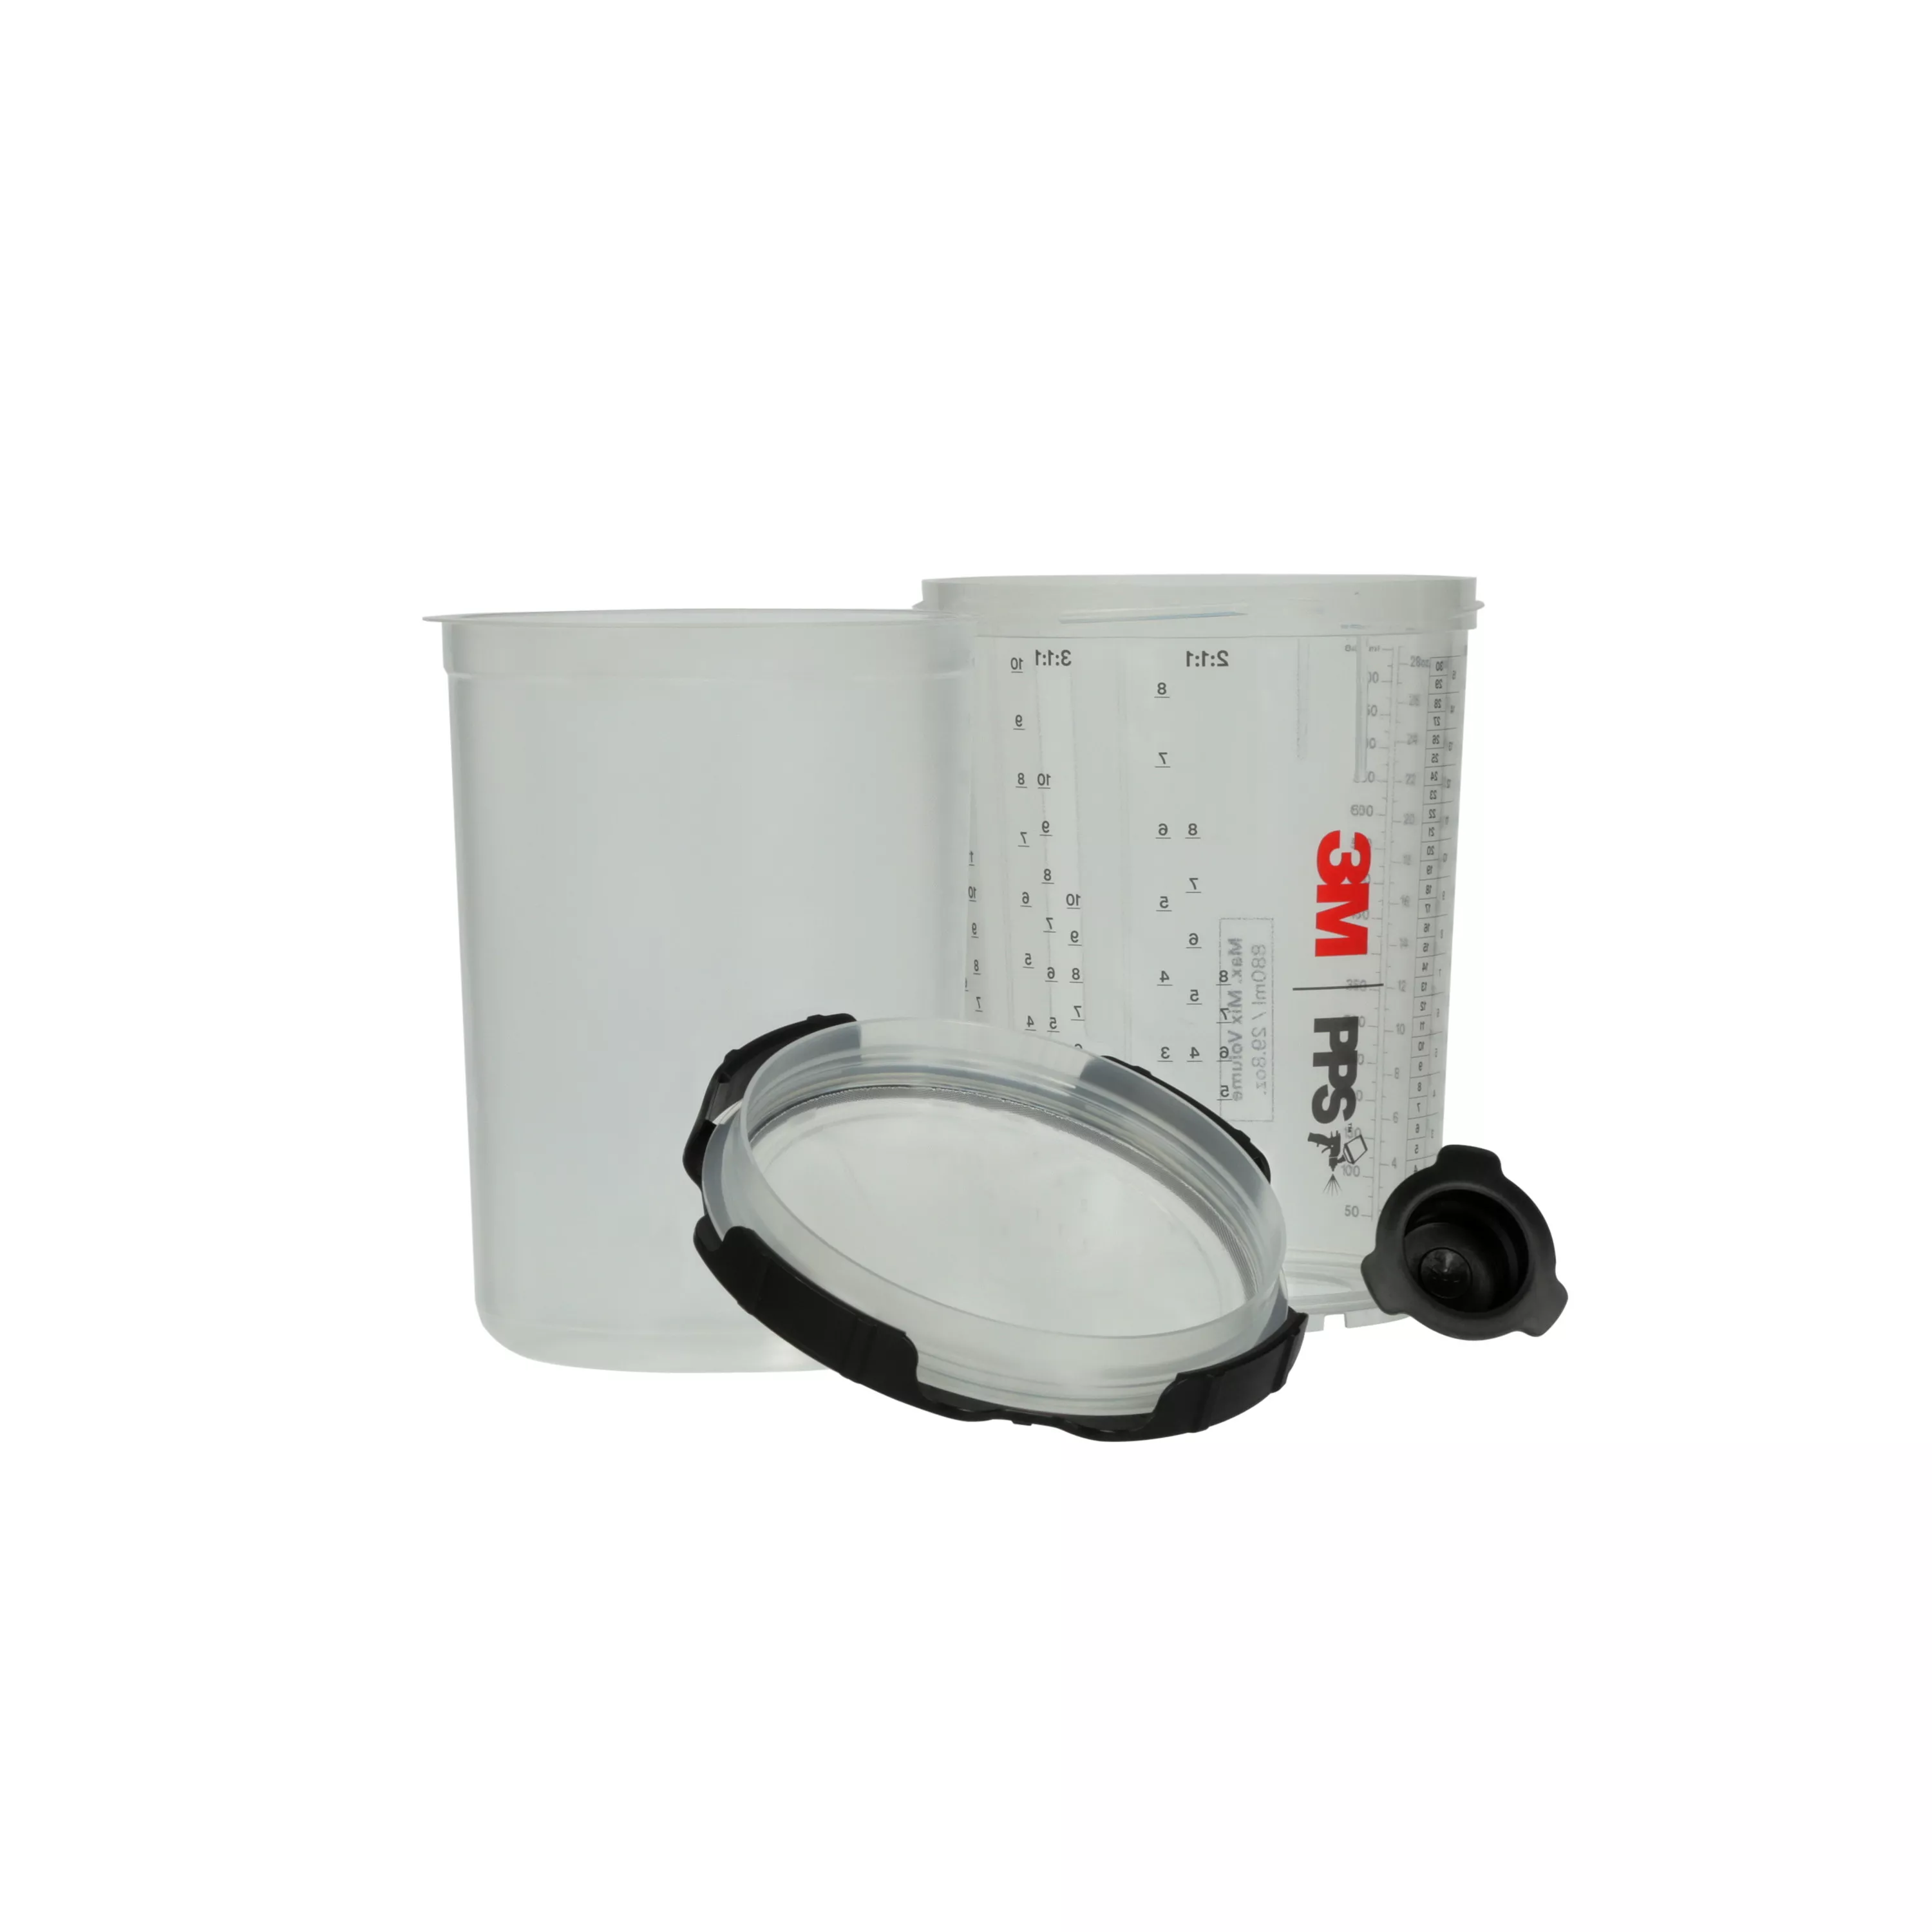 SKU 7100297030 | 3M™ PPS™ Series 2.0 Spray Cup System Kit 26024